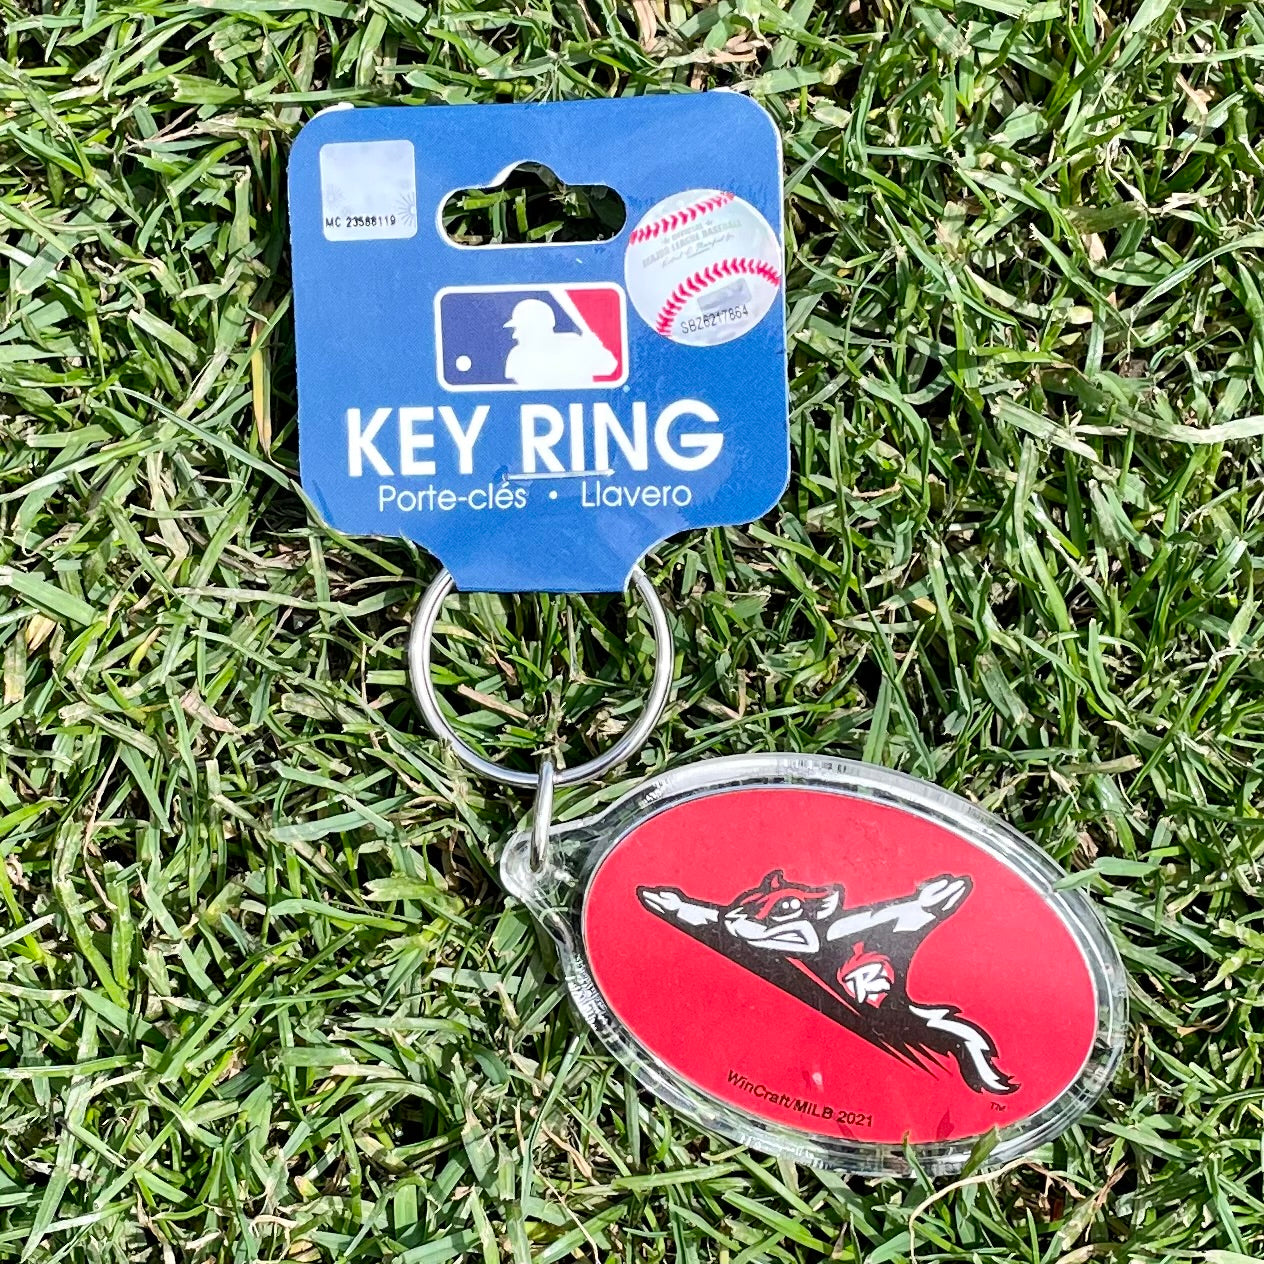 St. Louis Cardinals Spinning Baseball Keychain